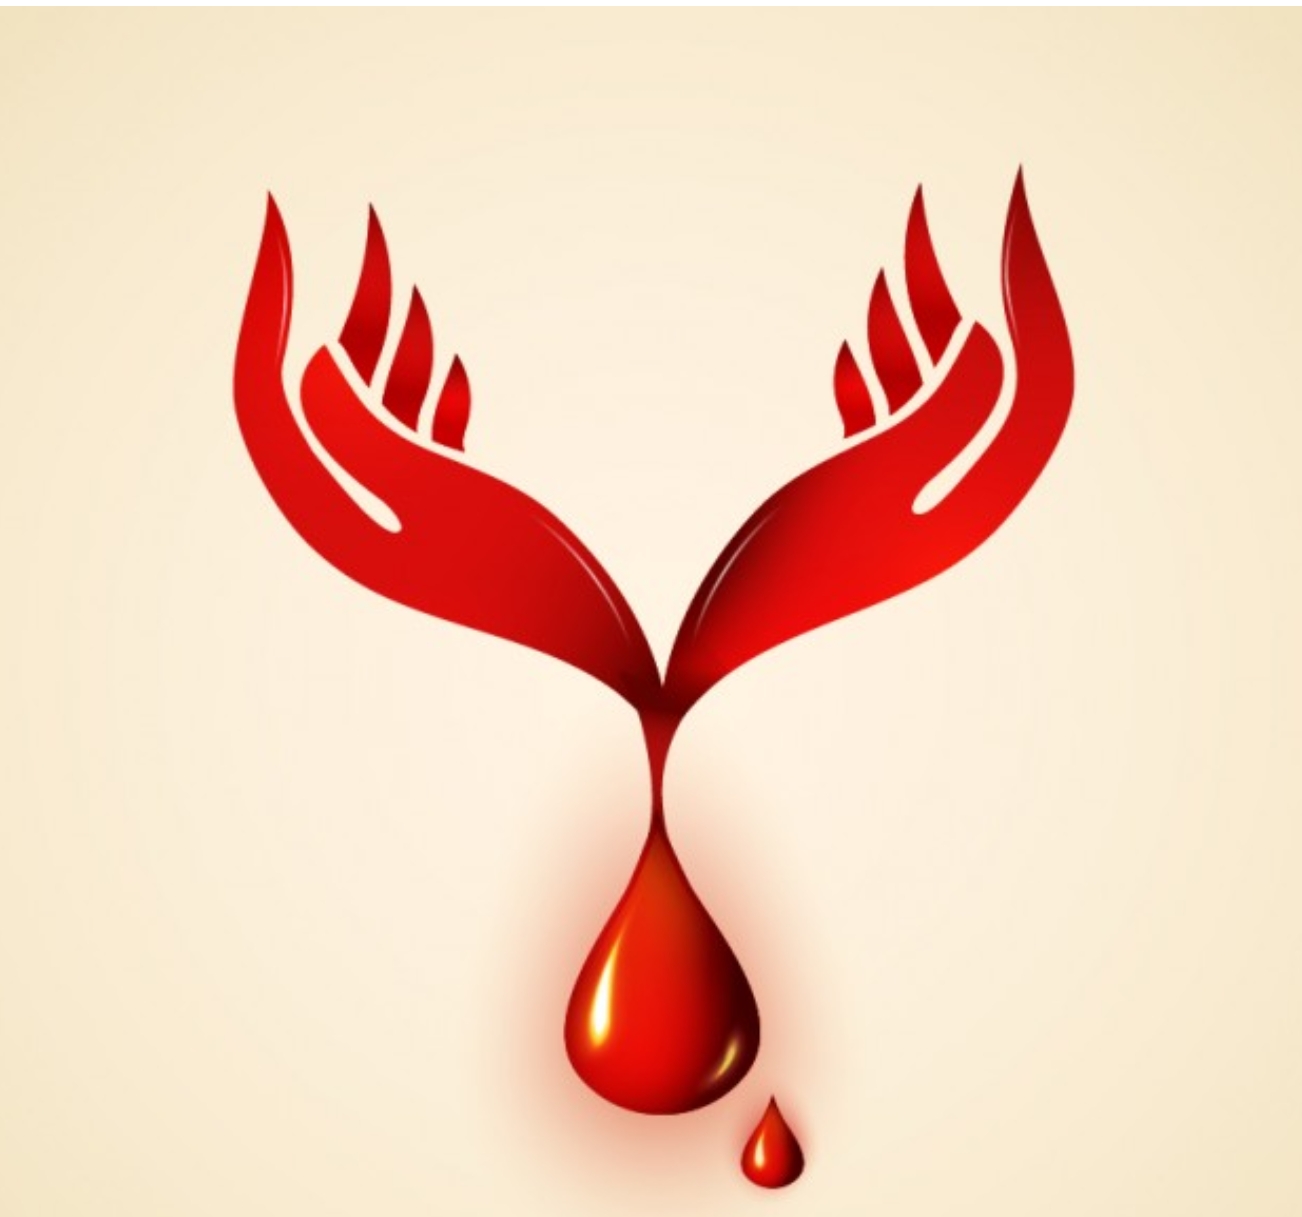 Sang com. Embliyma donorstva. Капля крови логотип. Символ донорства крови. Донорство крови логотип.